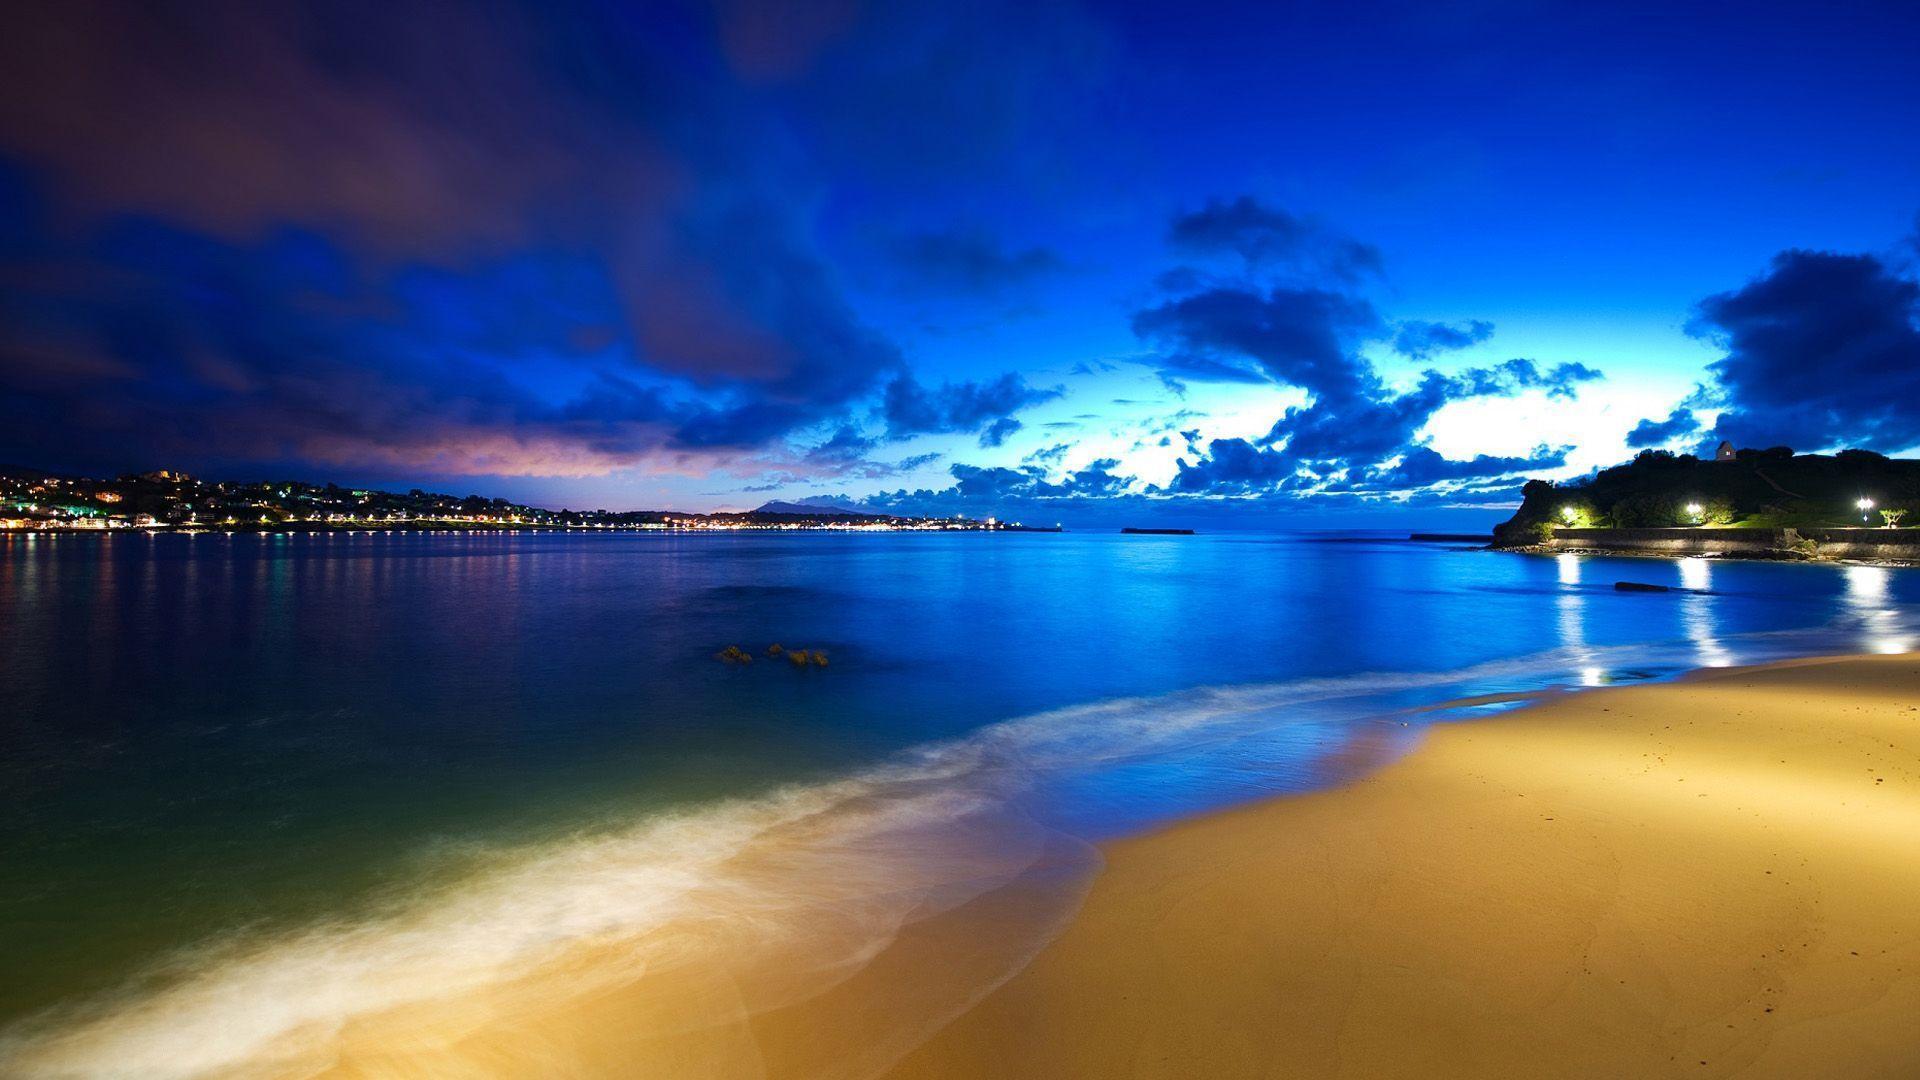 Cityscape wallpaper ocean blue wallpaper beauty shore night